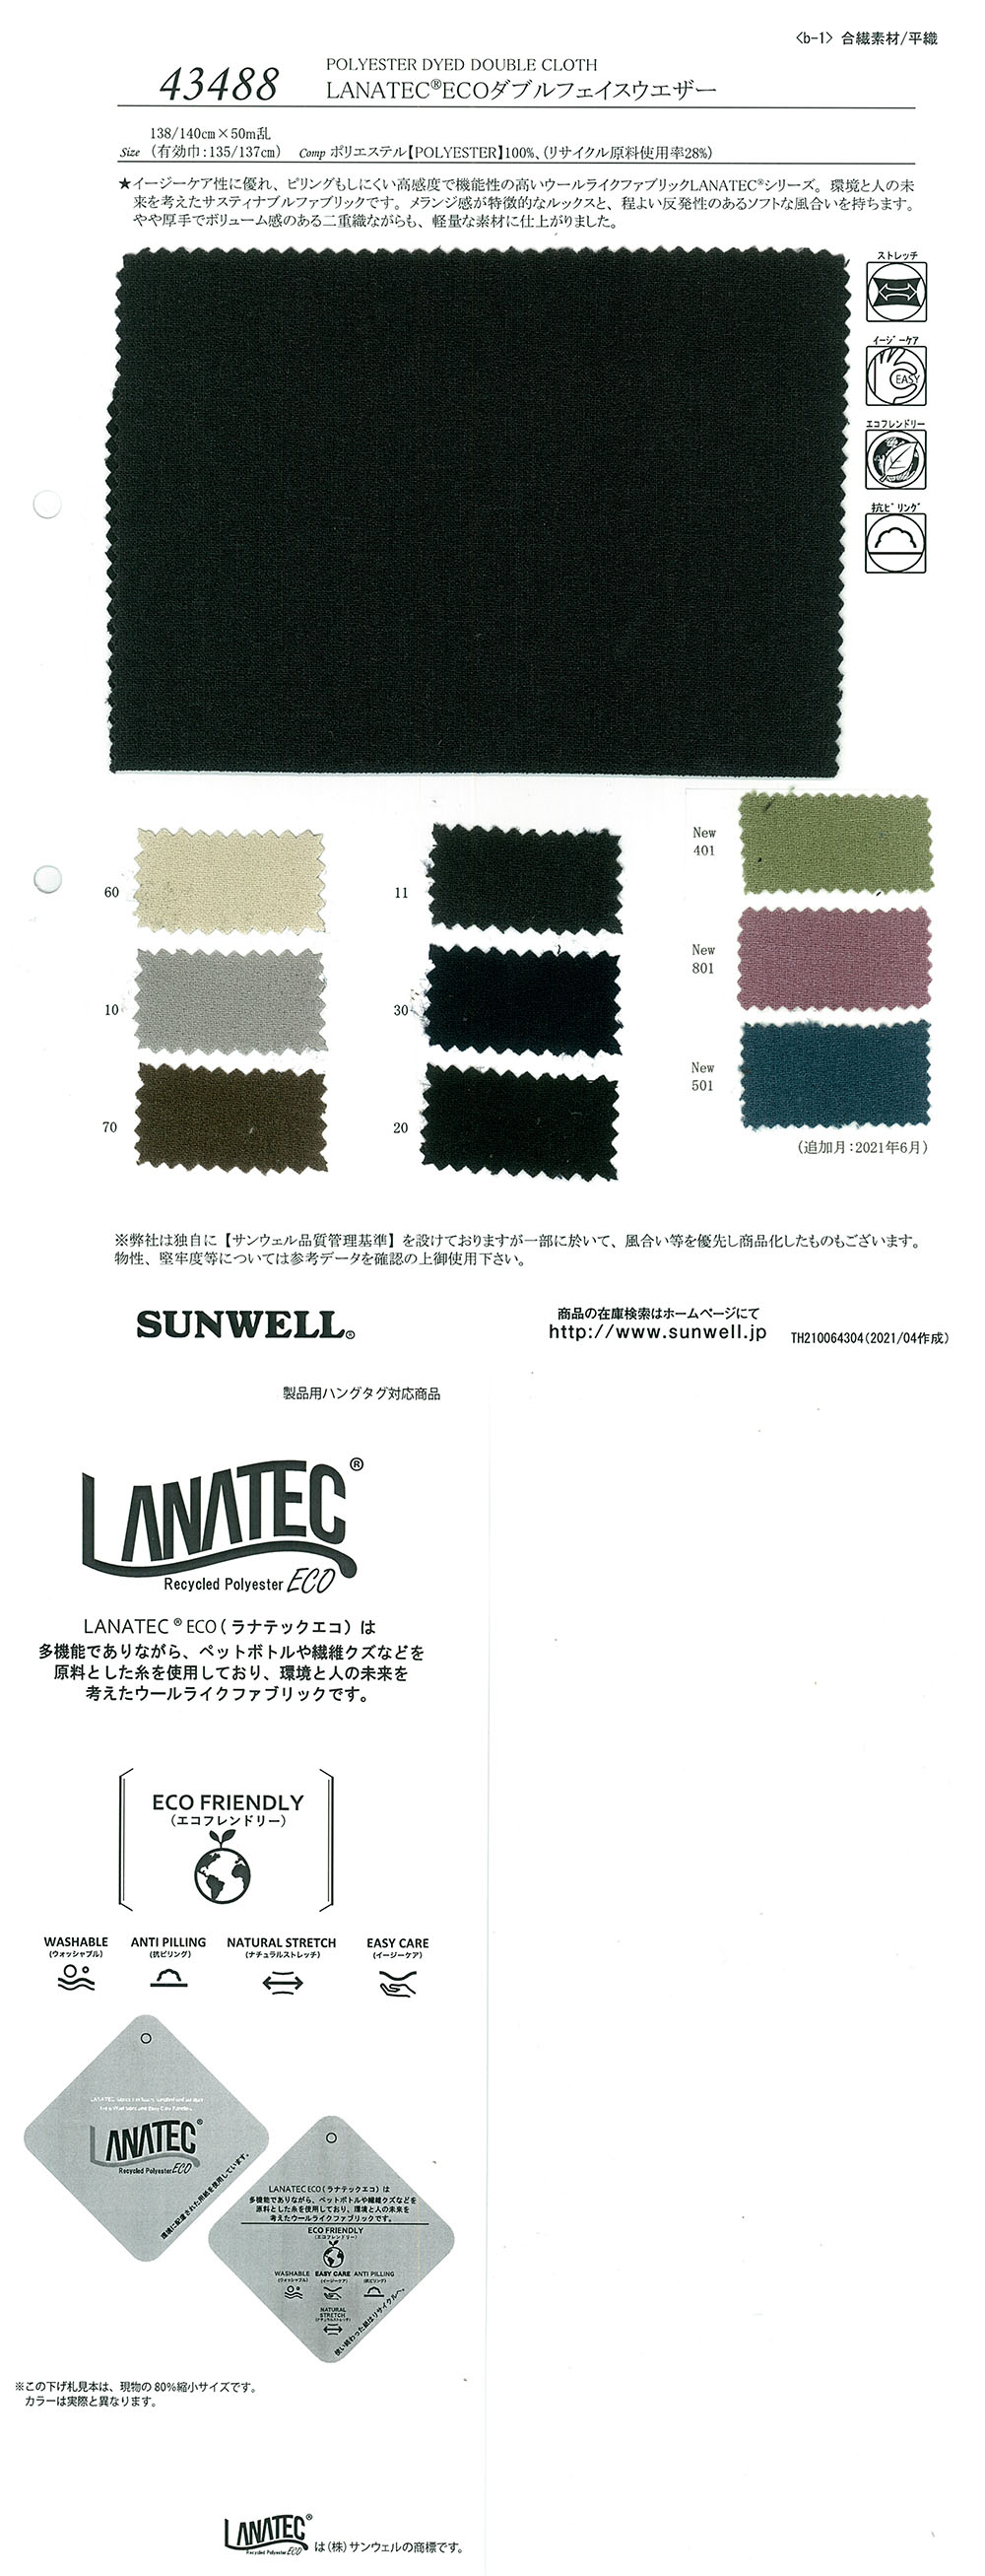 43488 LANATEC(R) ECO Double Face Weather[Textile / Fabric] SUNWELL